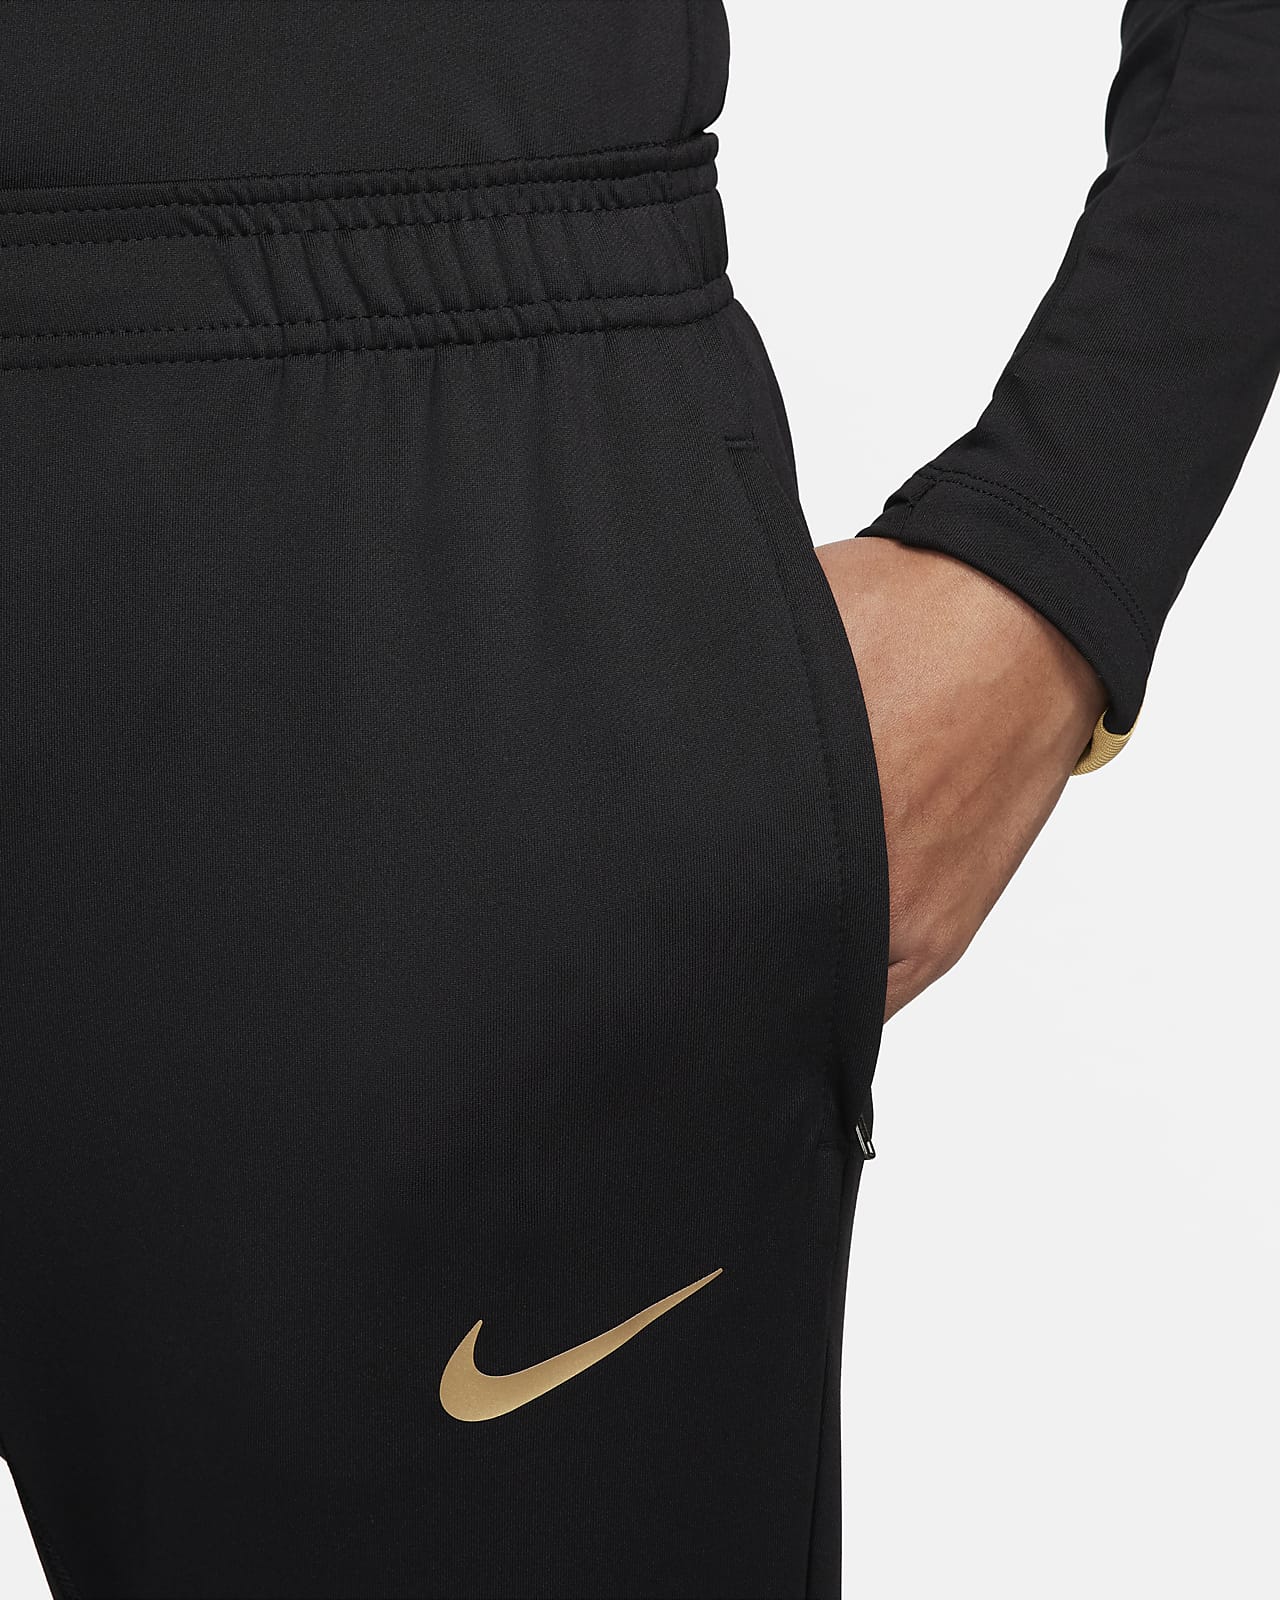 Nike, Dri-FIT Strike Track Pants Womens, Performance Tracksuit Bottoms